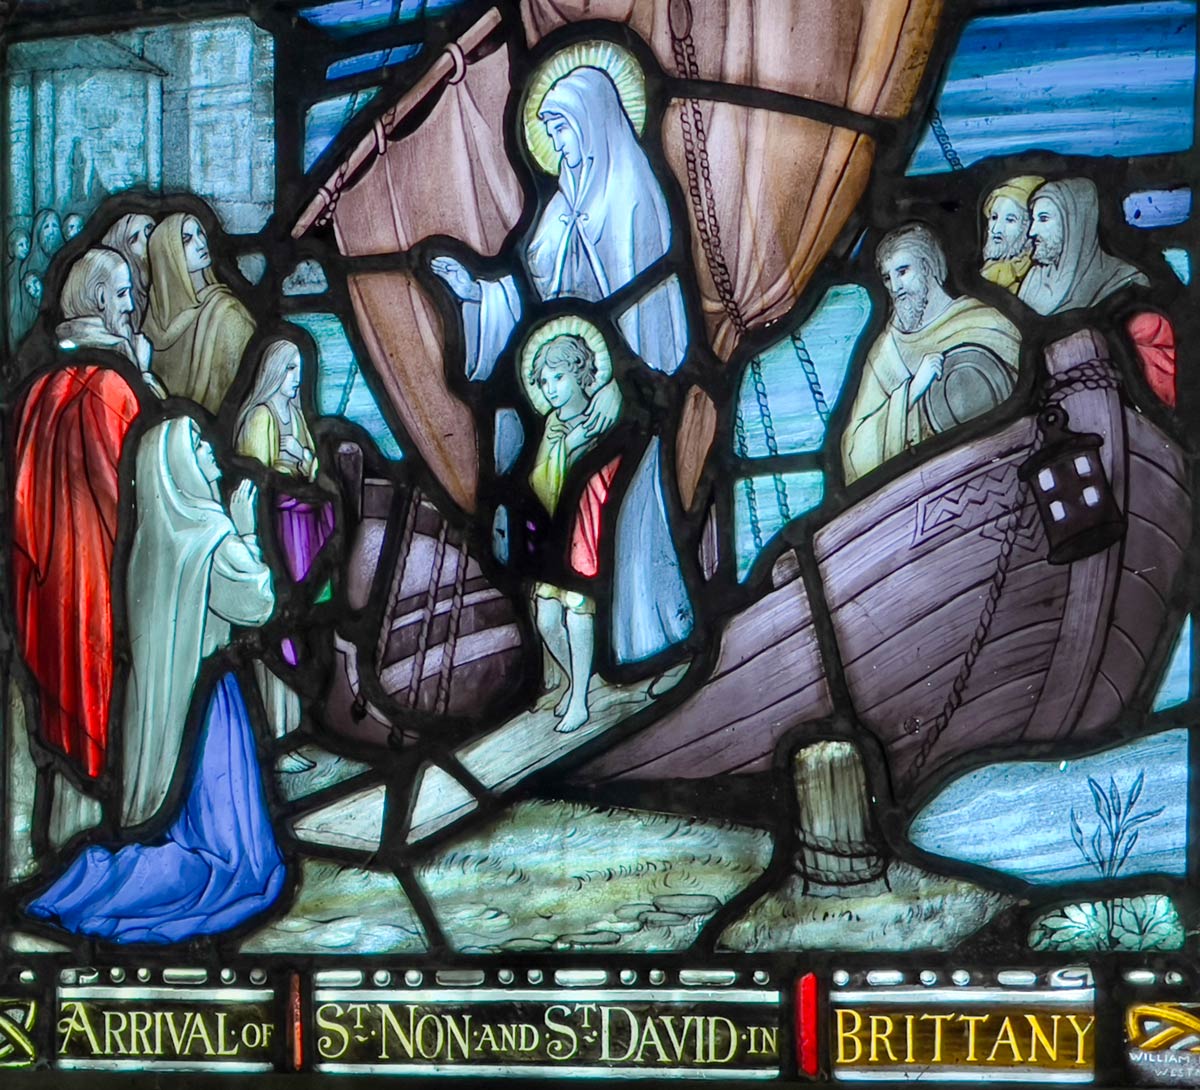 Vidriera que muestra la llegada de St Non y St David en Bretaña, la capilla de St Non, St David's